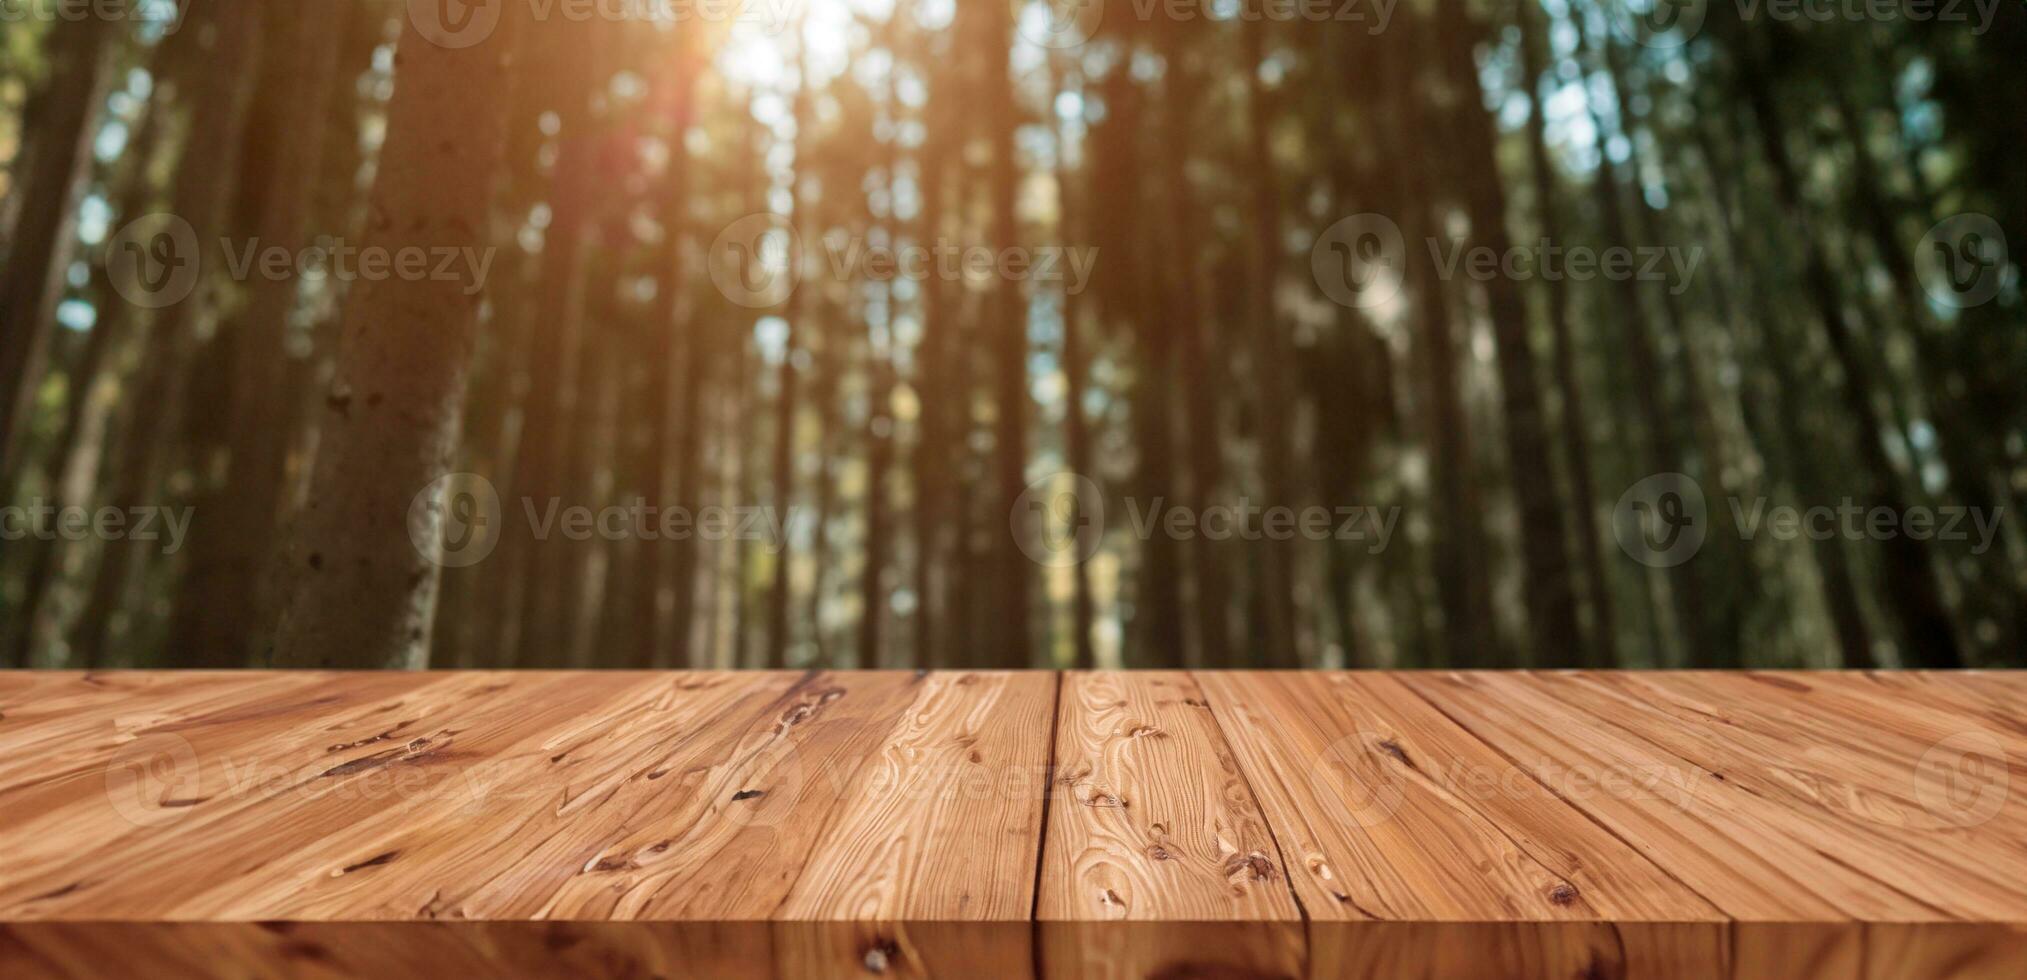 difuminar profundo bosque pino negro madera en alto montaña con blanco de madera tablero para aventuras productos publicidad montaje antecedentes foto